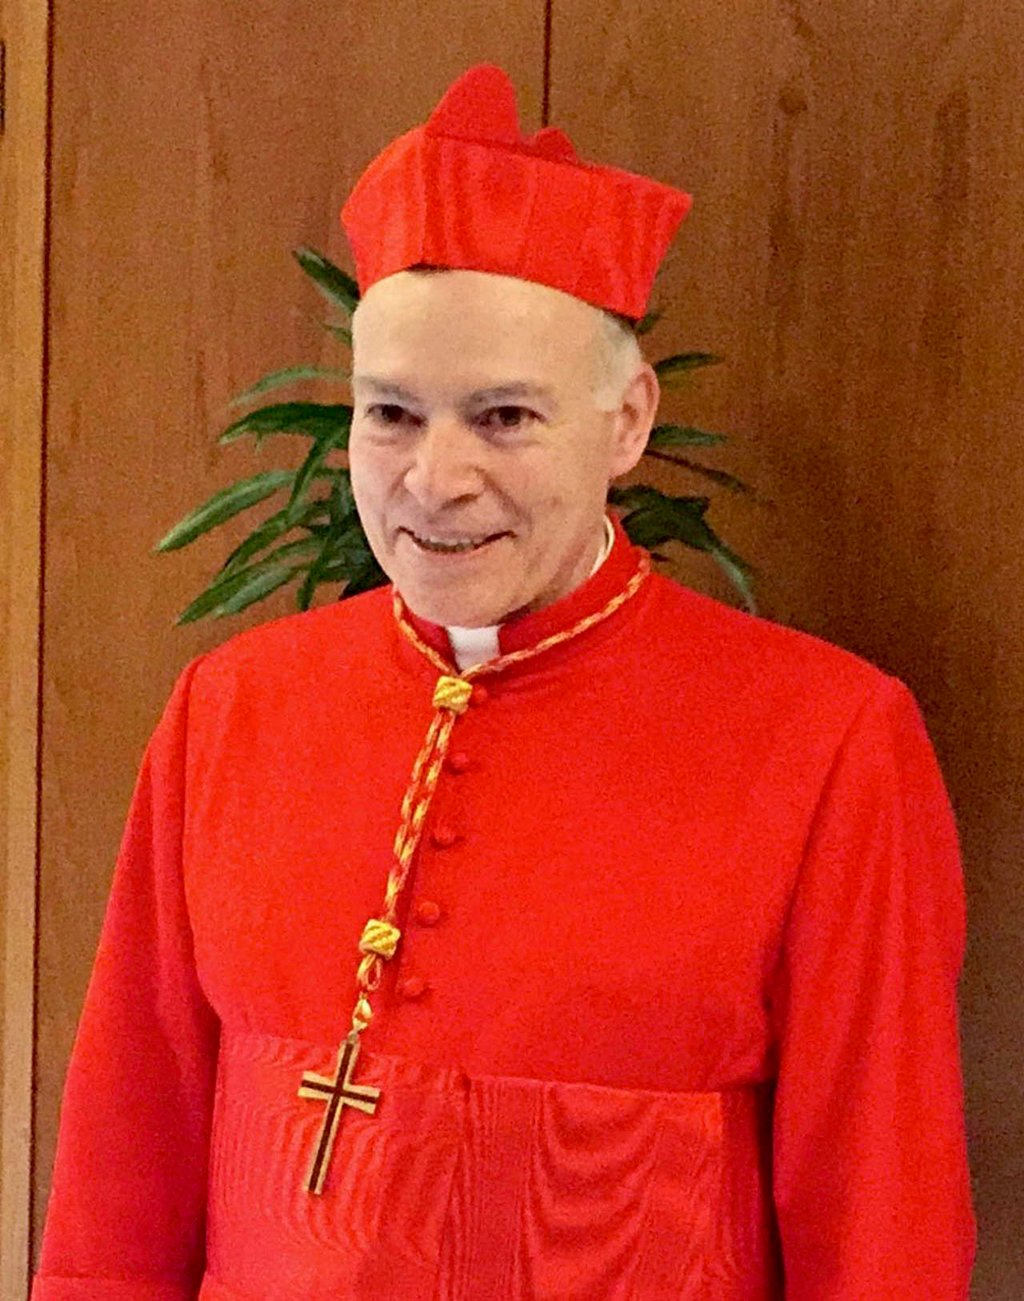 Nuevo arzobispo tiene desafío de dar giro a diócesis desprestigiada